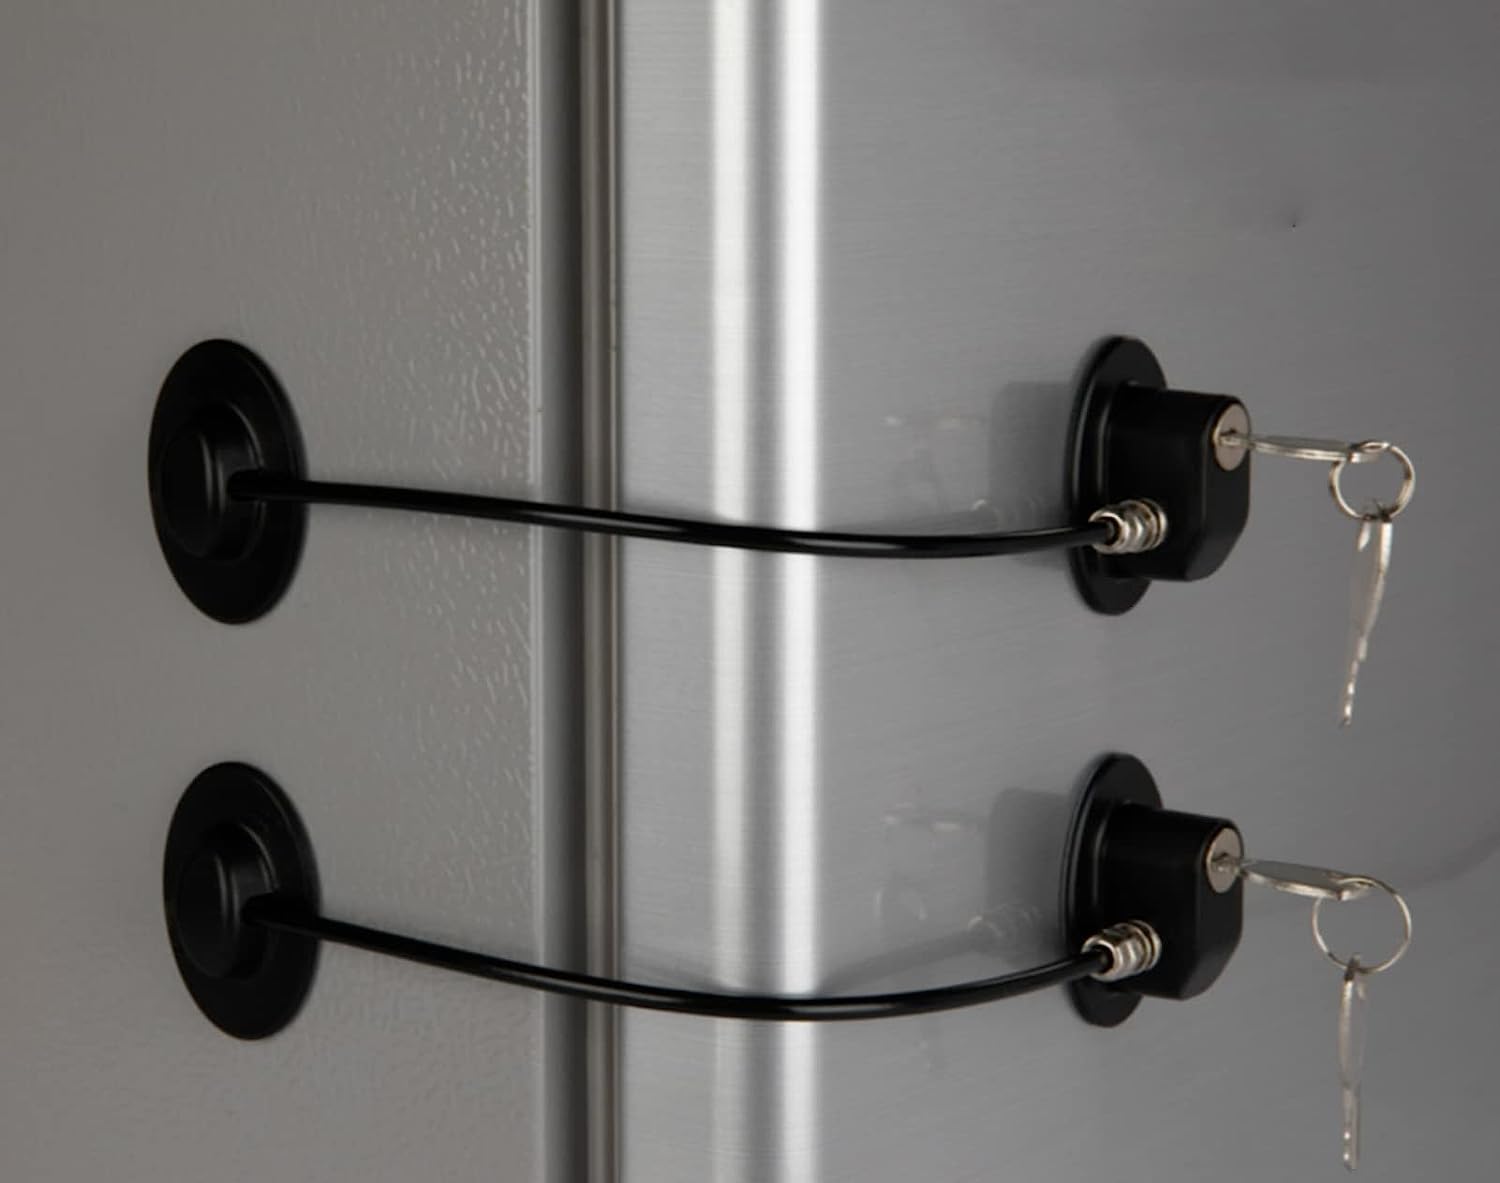 Refrigerator Lock, Mini Fridge Lock with Key for Adults, Lock for A Fridge,  Cabinet Door(White 4Pack) 